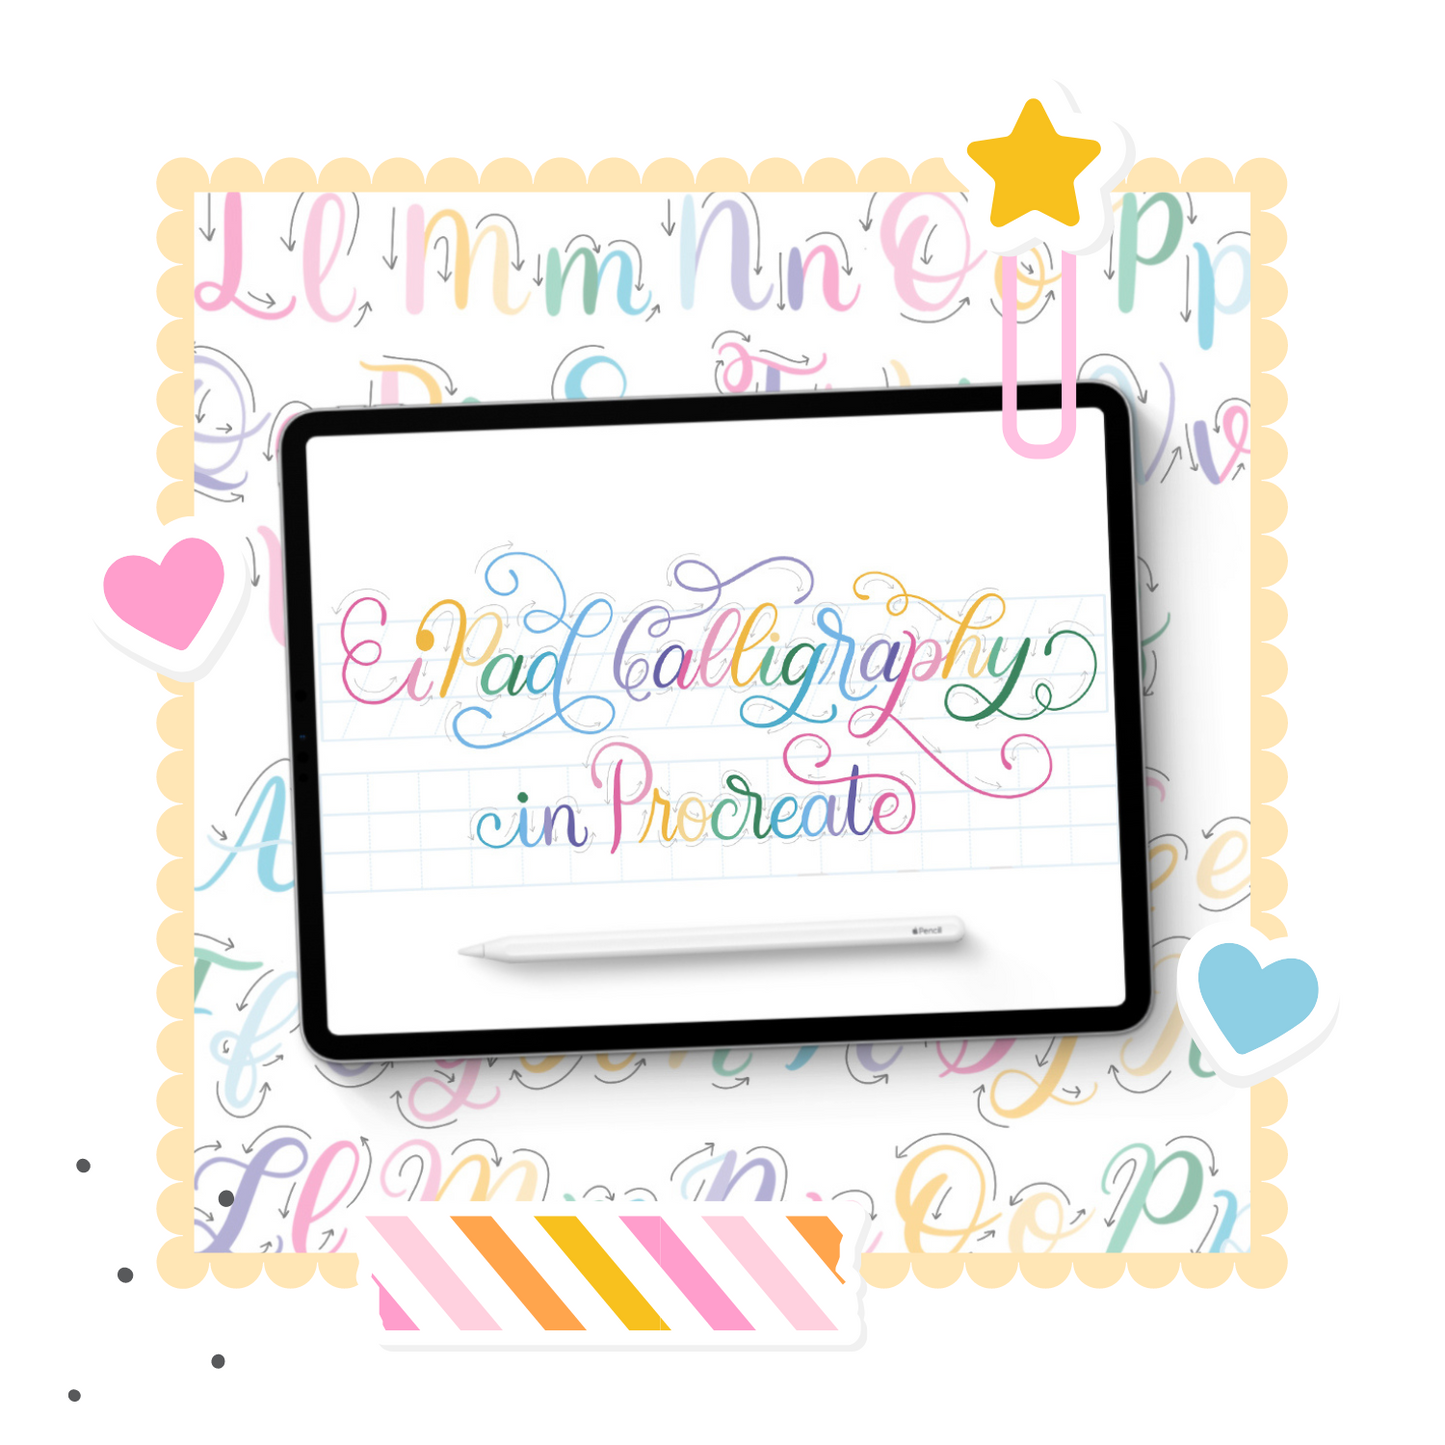 NEW! iPad Calligraphy in Procreate